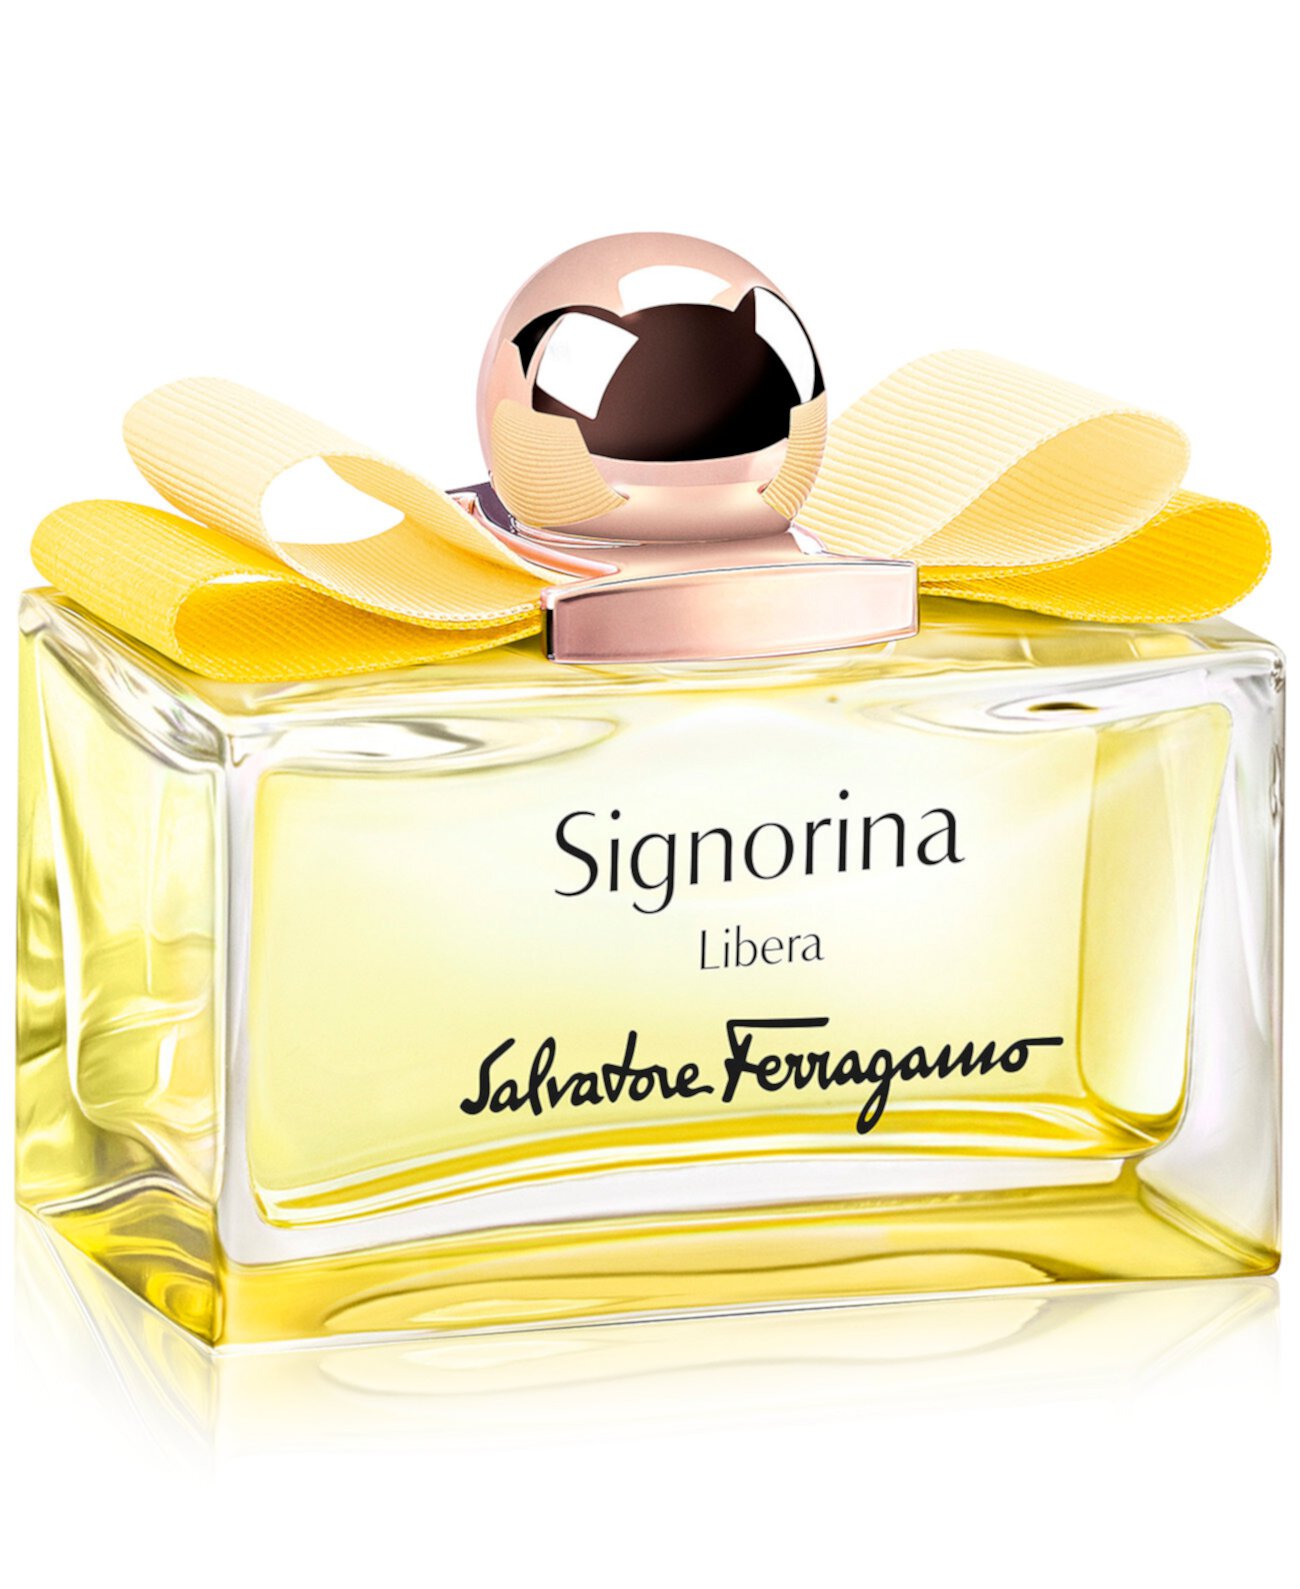 Signorina Libera Eau de Parfum, 3.4 oz. Ferragamo